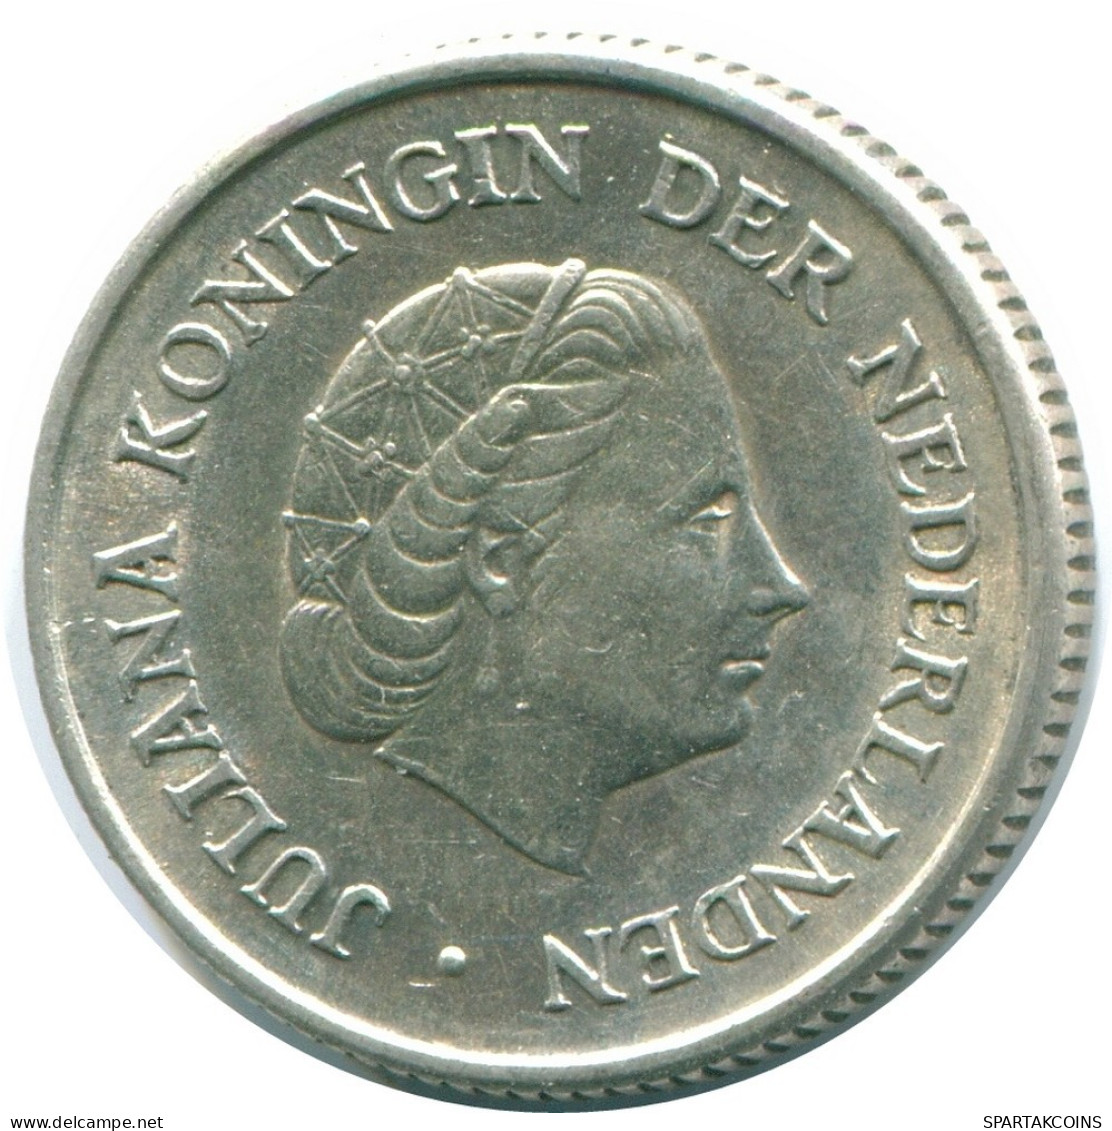 1/4 GULDEN 1967 NIEDERLÄNDISCHE ANTILLEN SILBER Koloniale Münze #NL11467.4.D.A - Netherlands Antilles